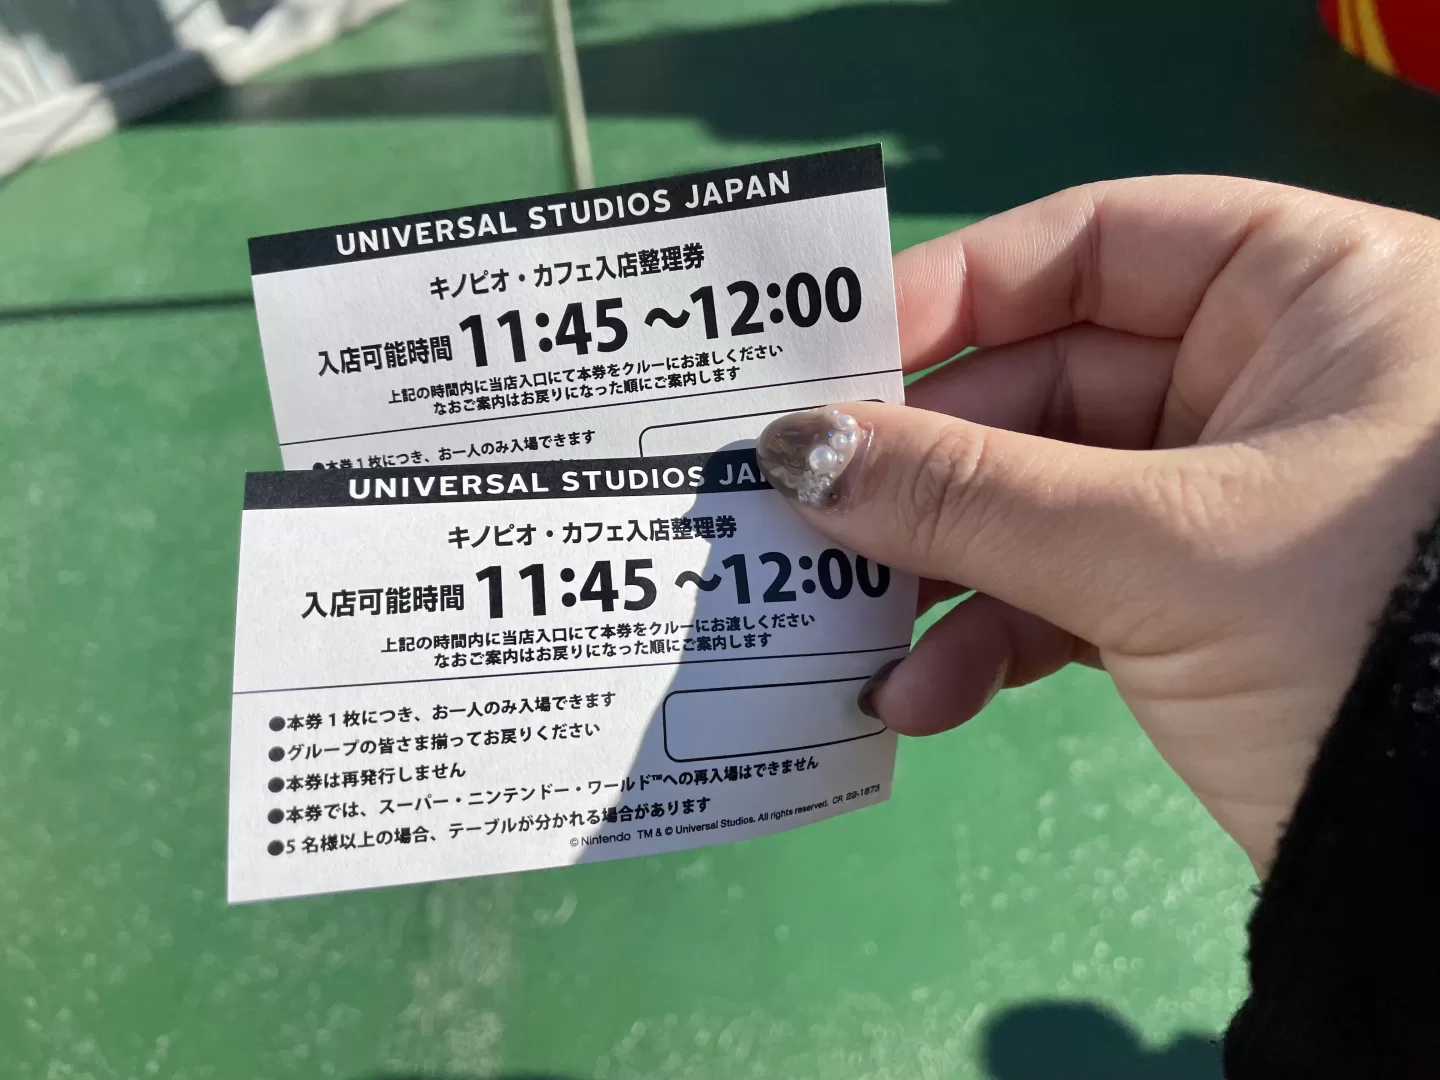 Tickets for USJ